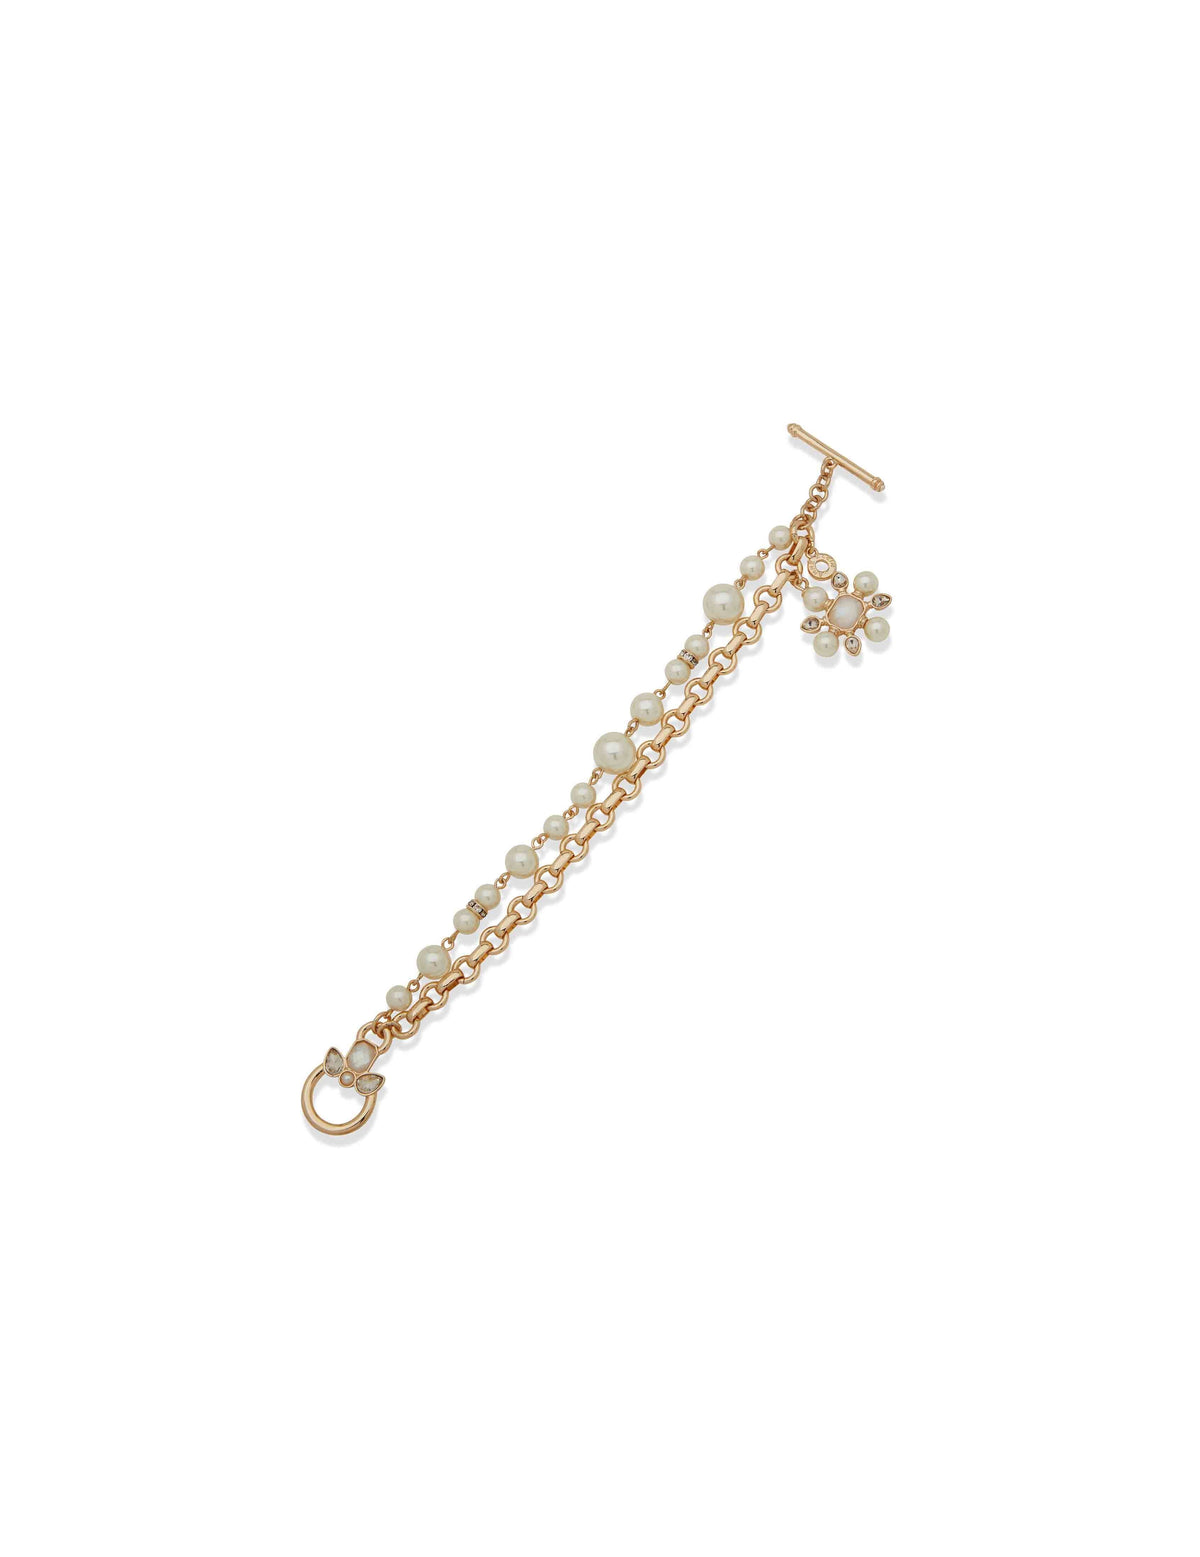 Anne Klein Gold Tone Flex Chain Bracelet and Faux Blanc Pearl Toggle